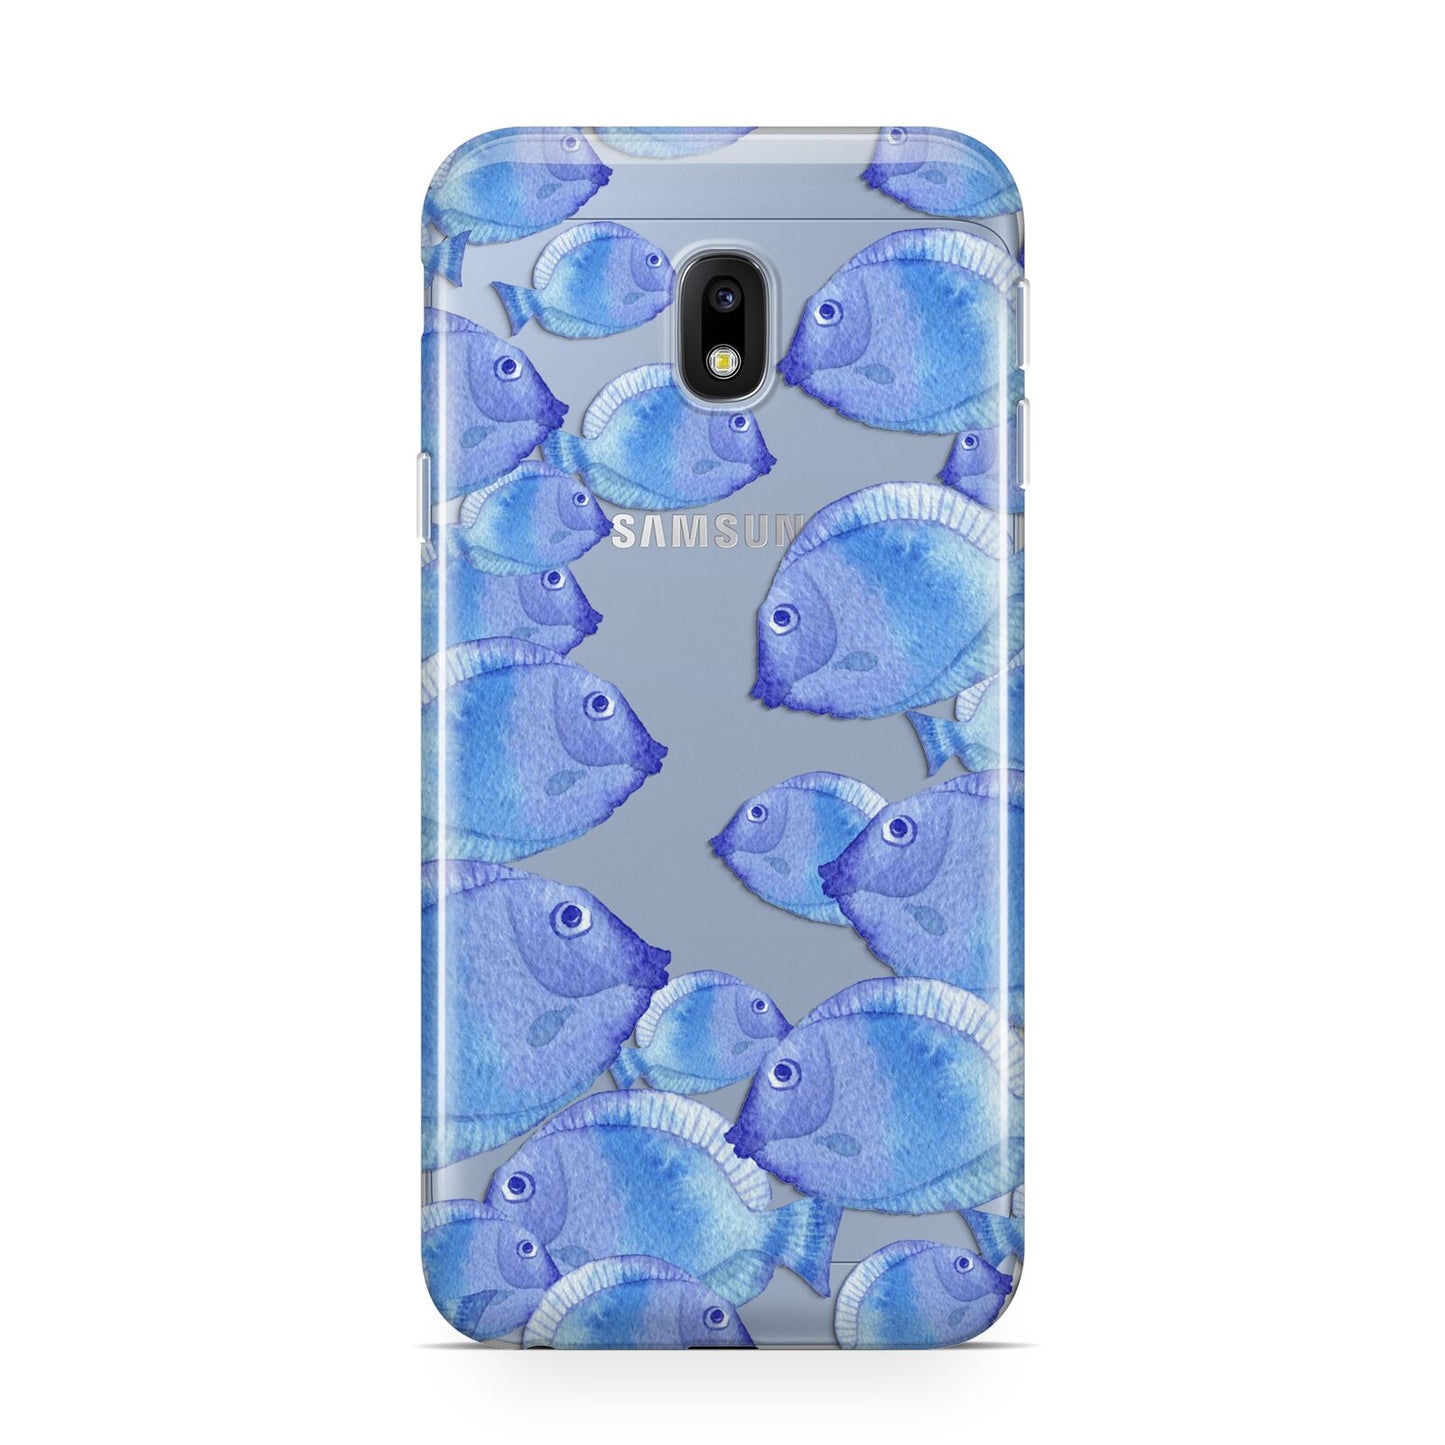 Fish Samsung Galaxy J3 2017 Case